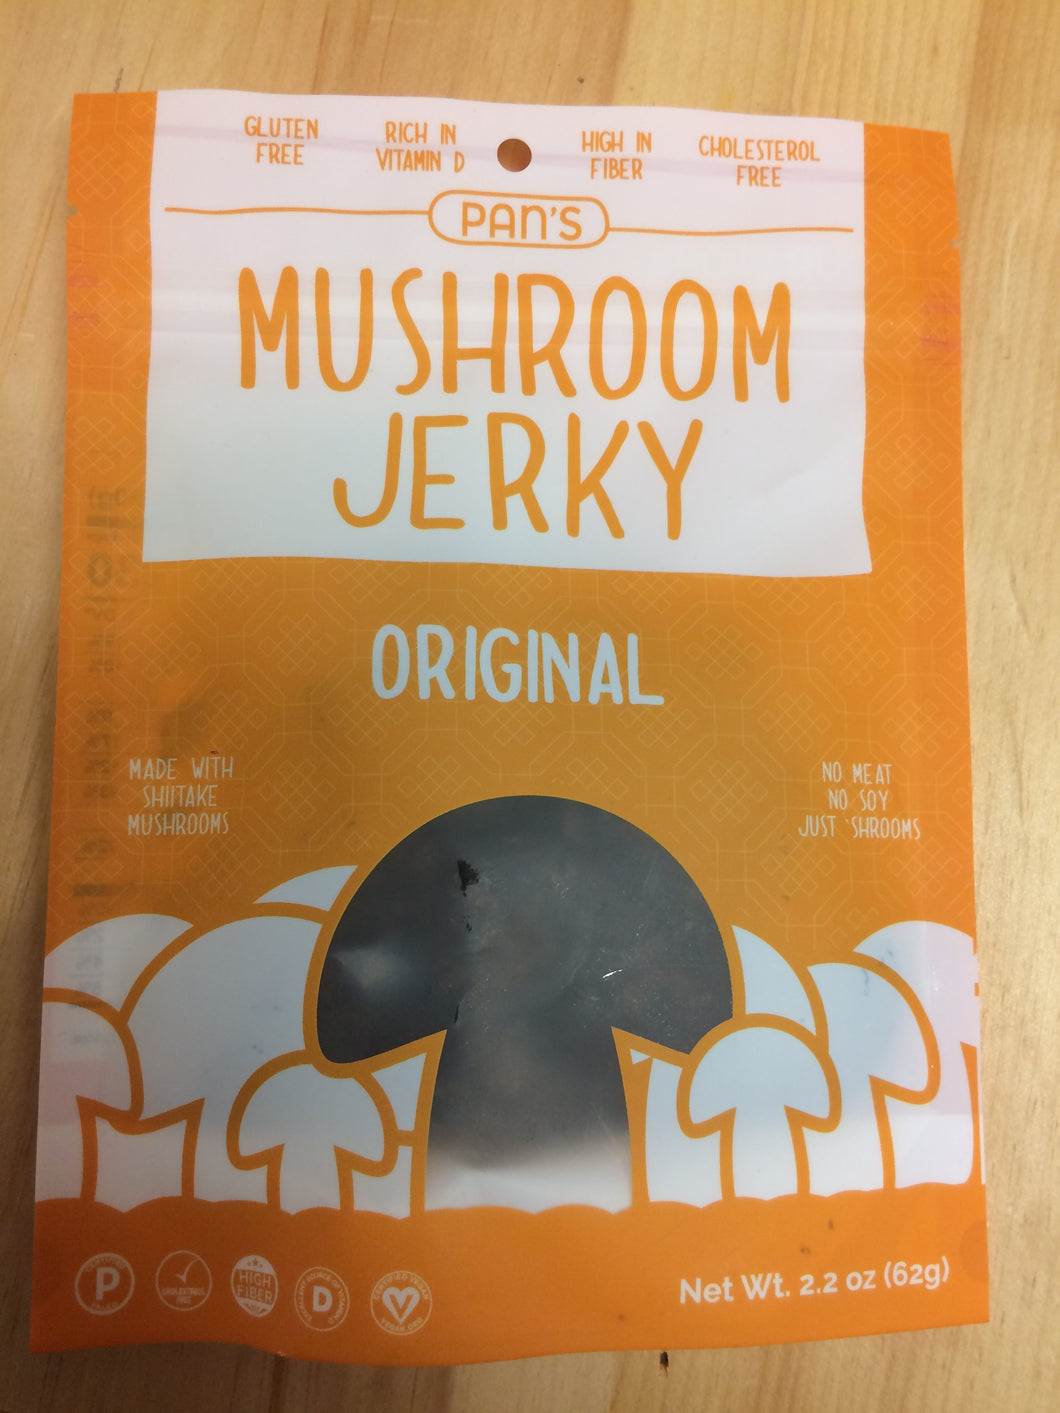 Vegan Jerky - Pan's Original Mushroom